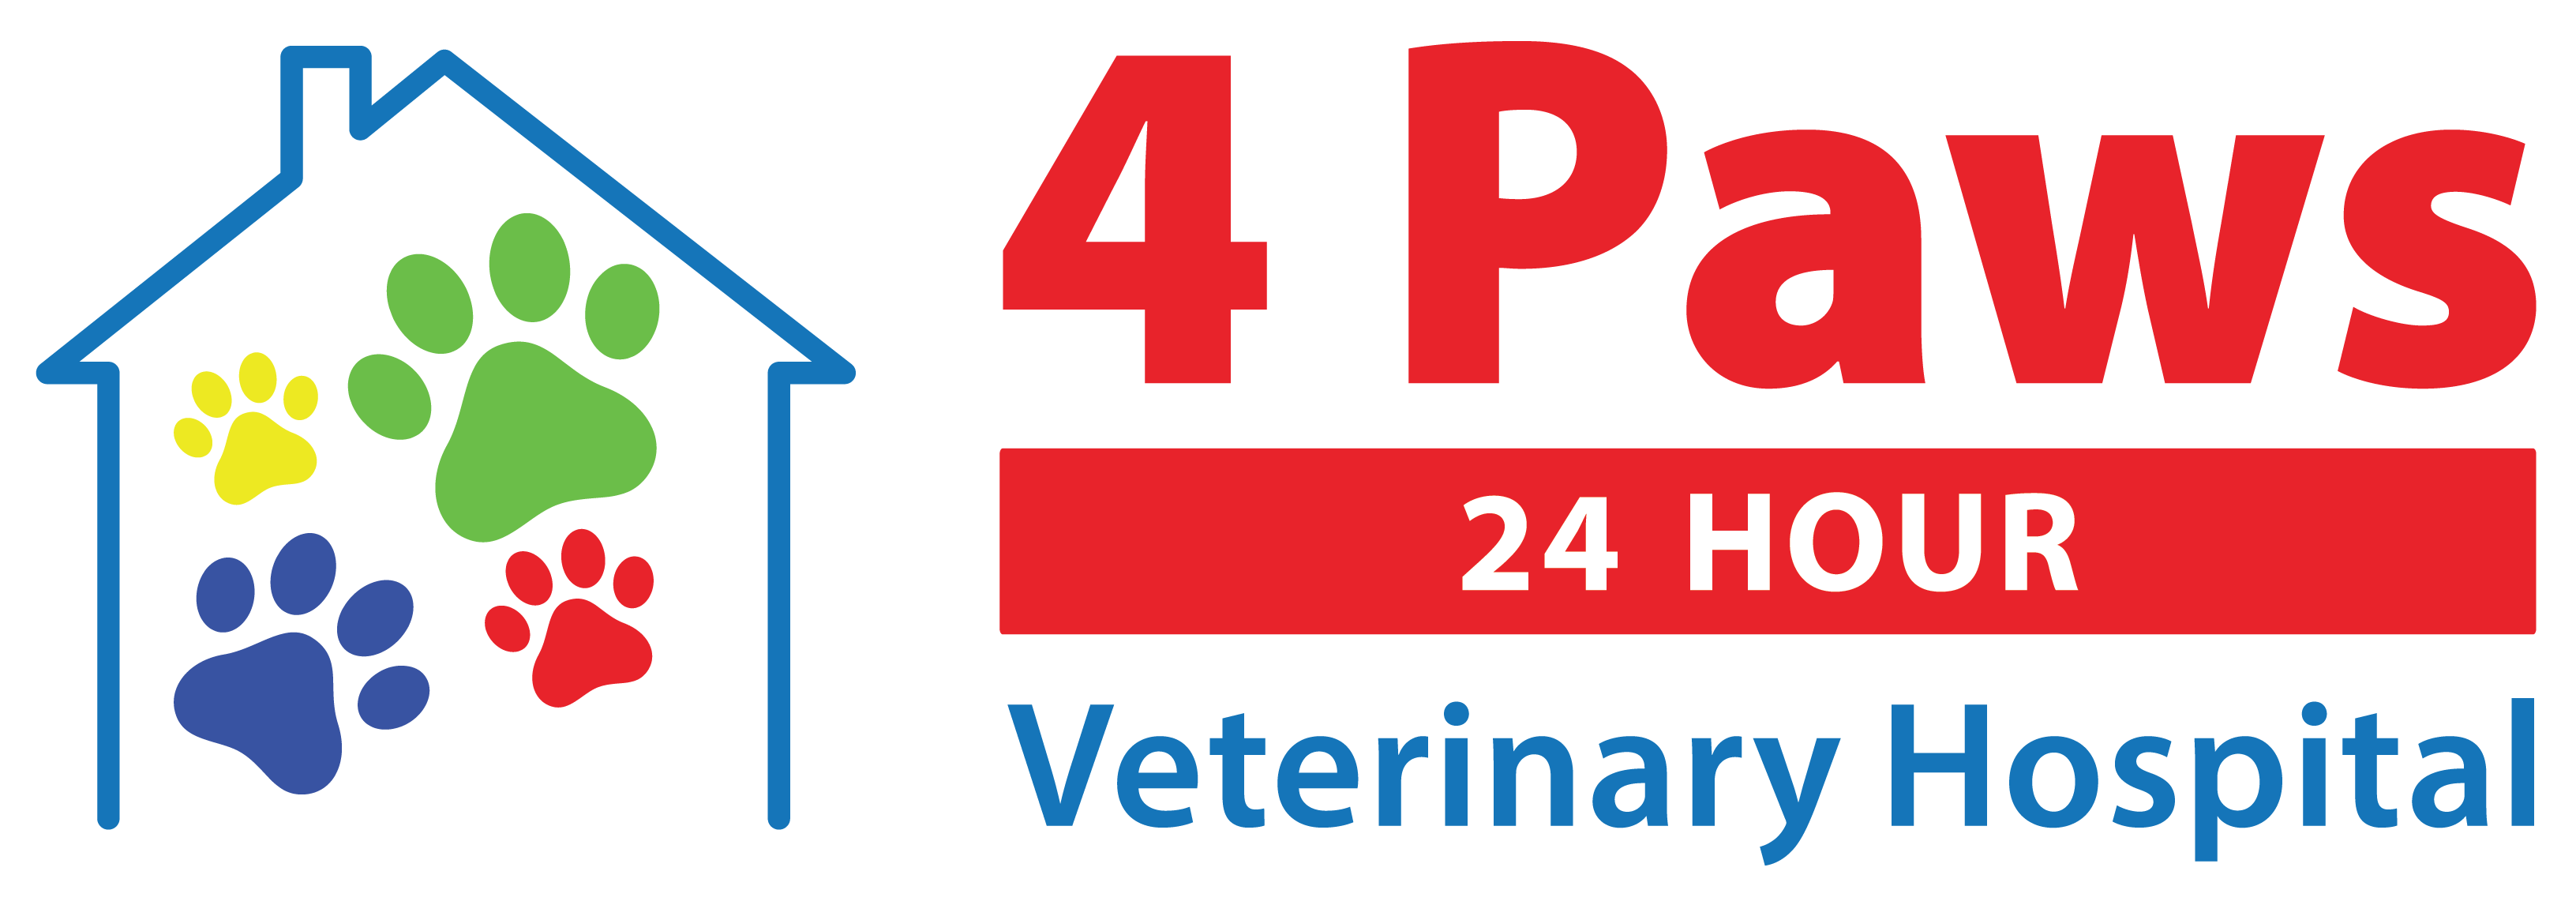 Logo of 4 Paws 24 Hour Veterinary Hospital in Halifax, Nova Scotia